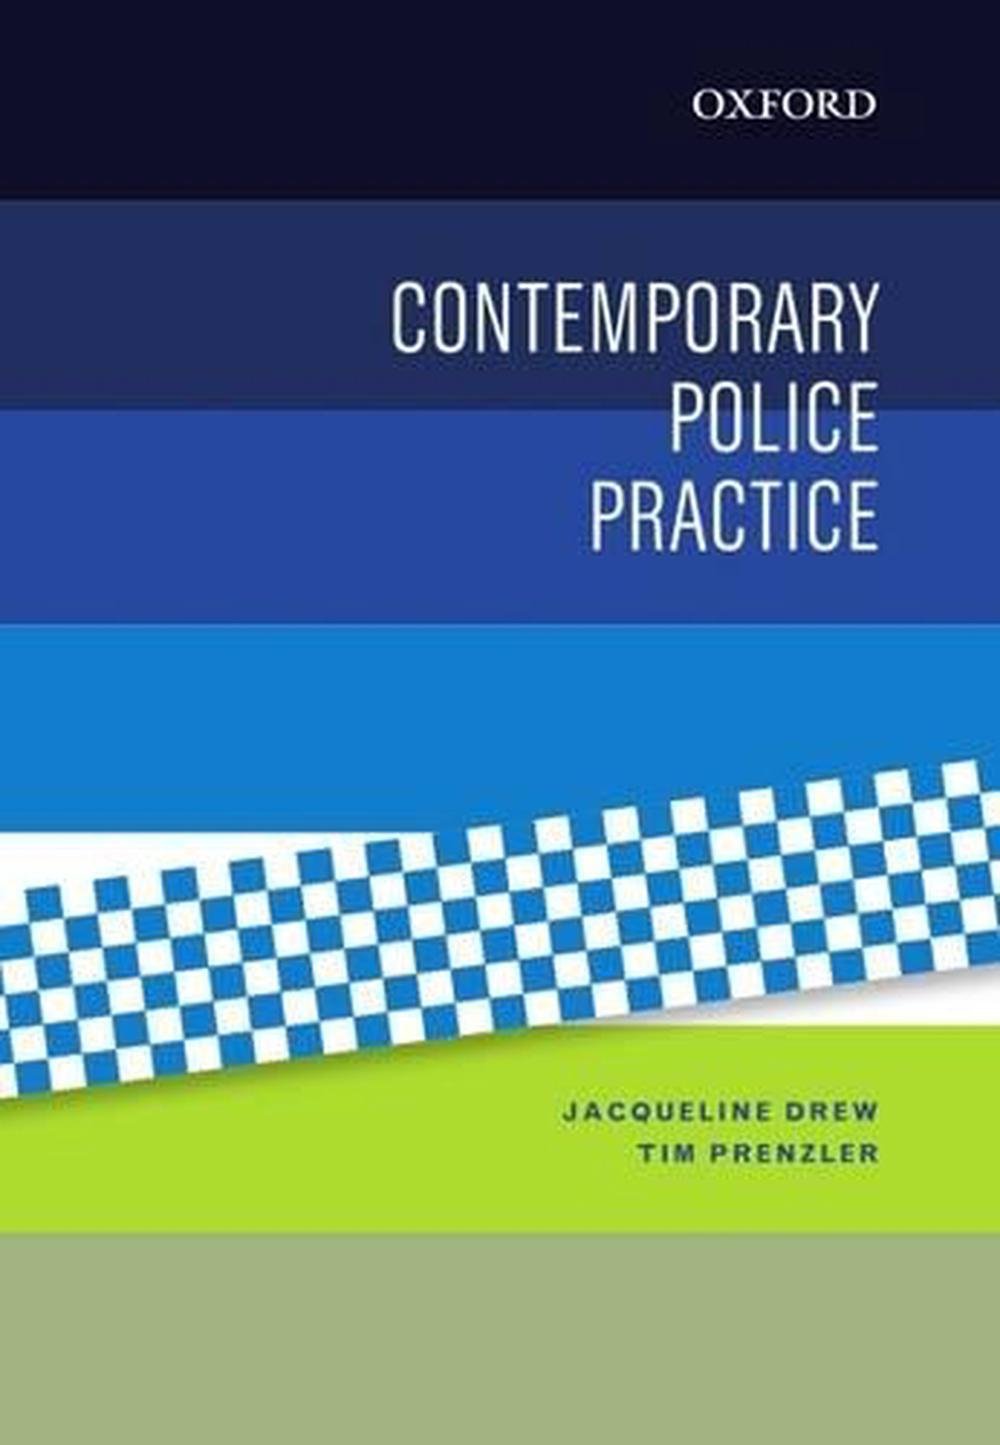 Contemporary police practice drew and prenzler pdf